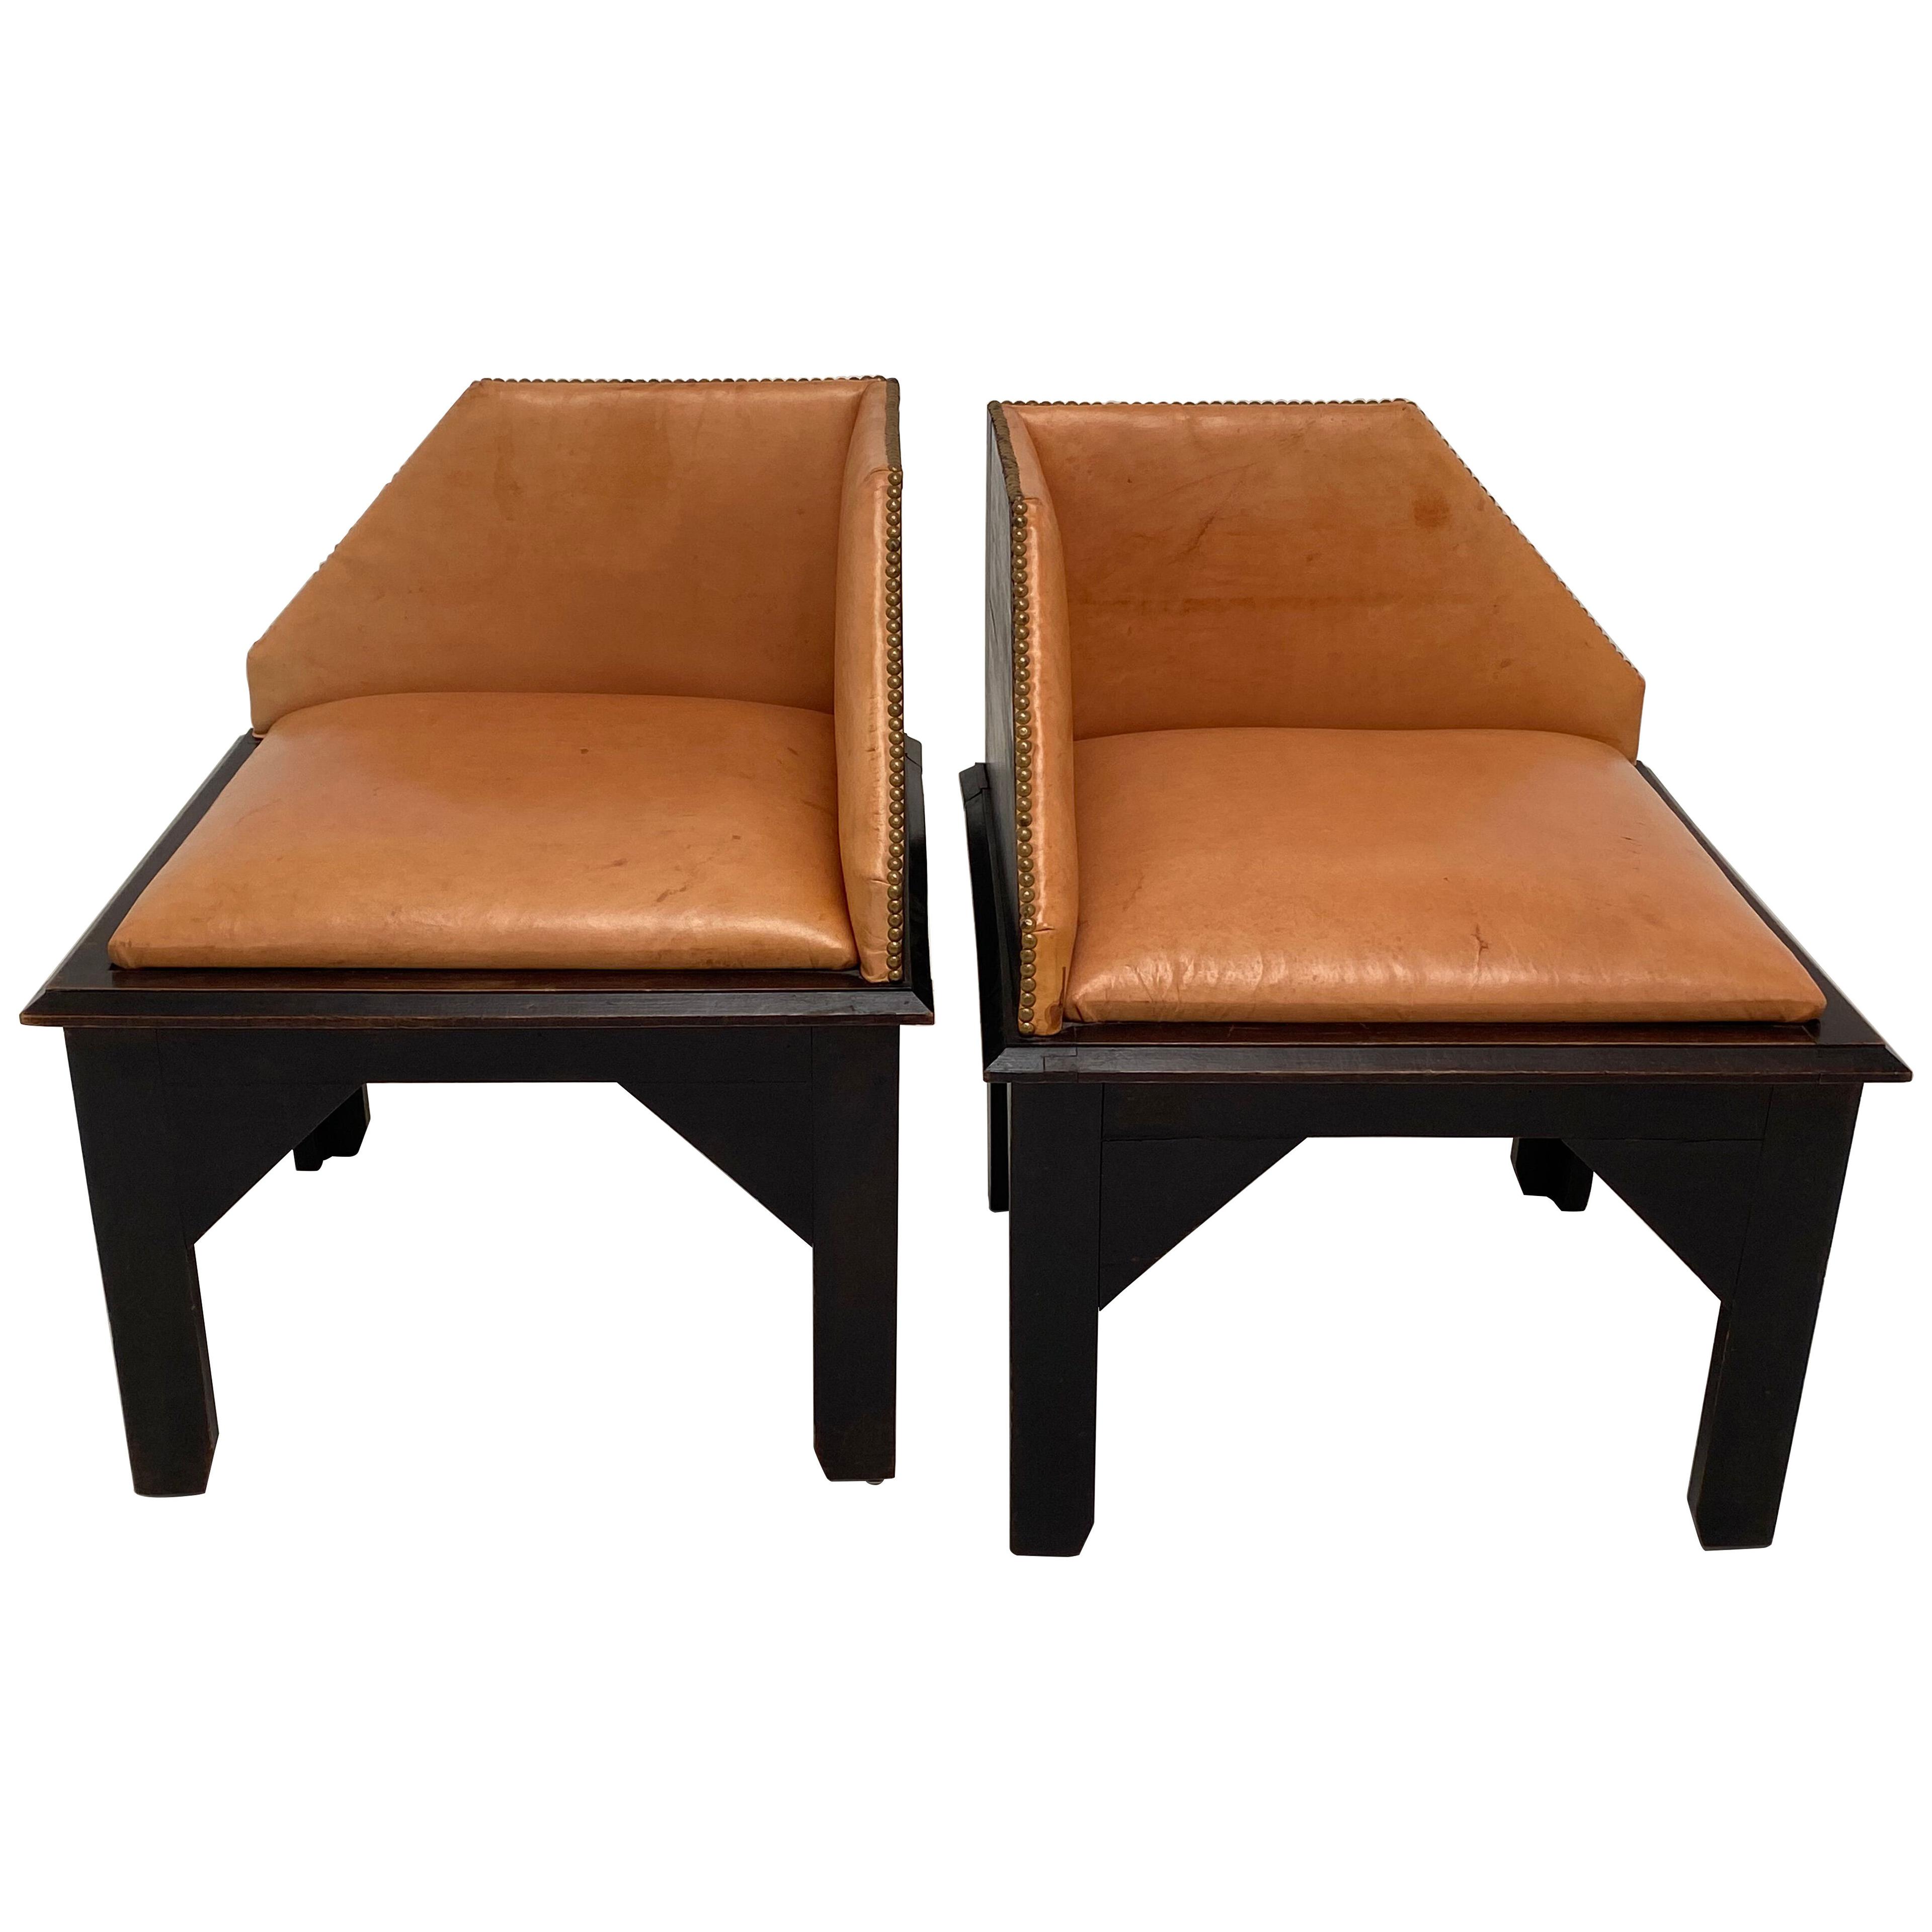 Pair of Art Deco Style Corner Chairs